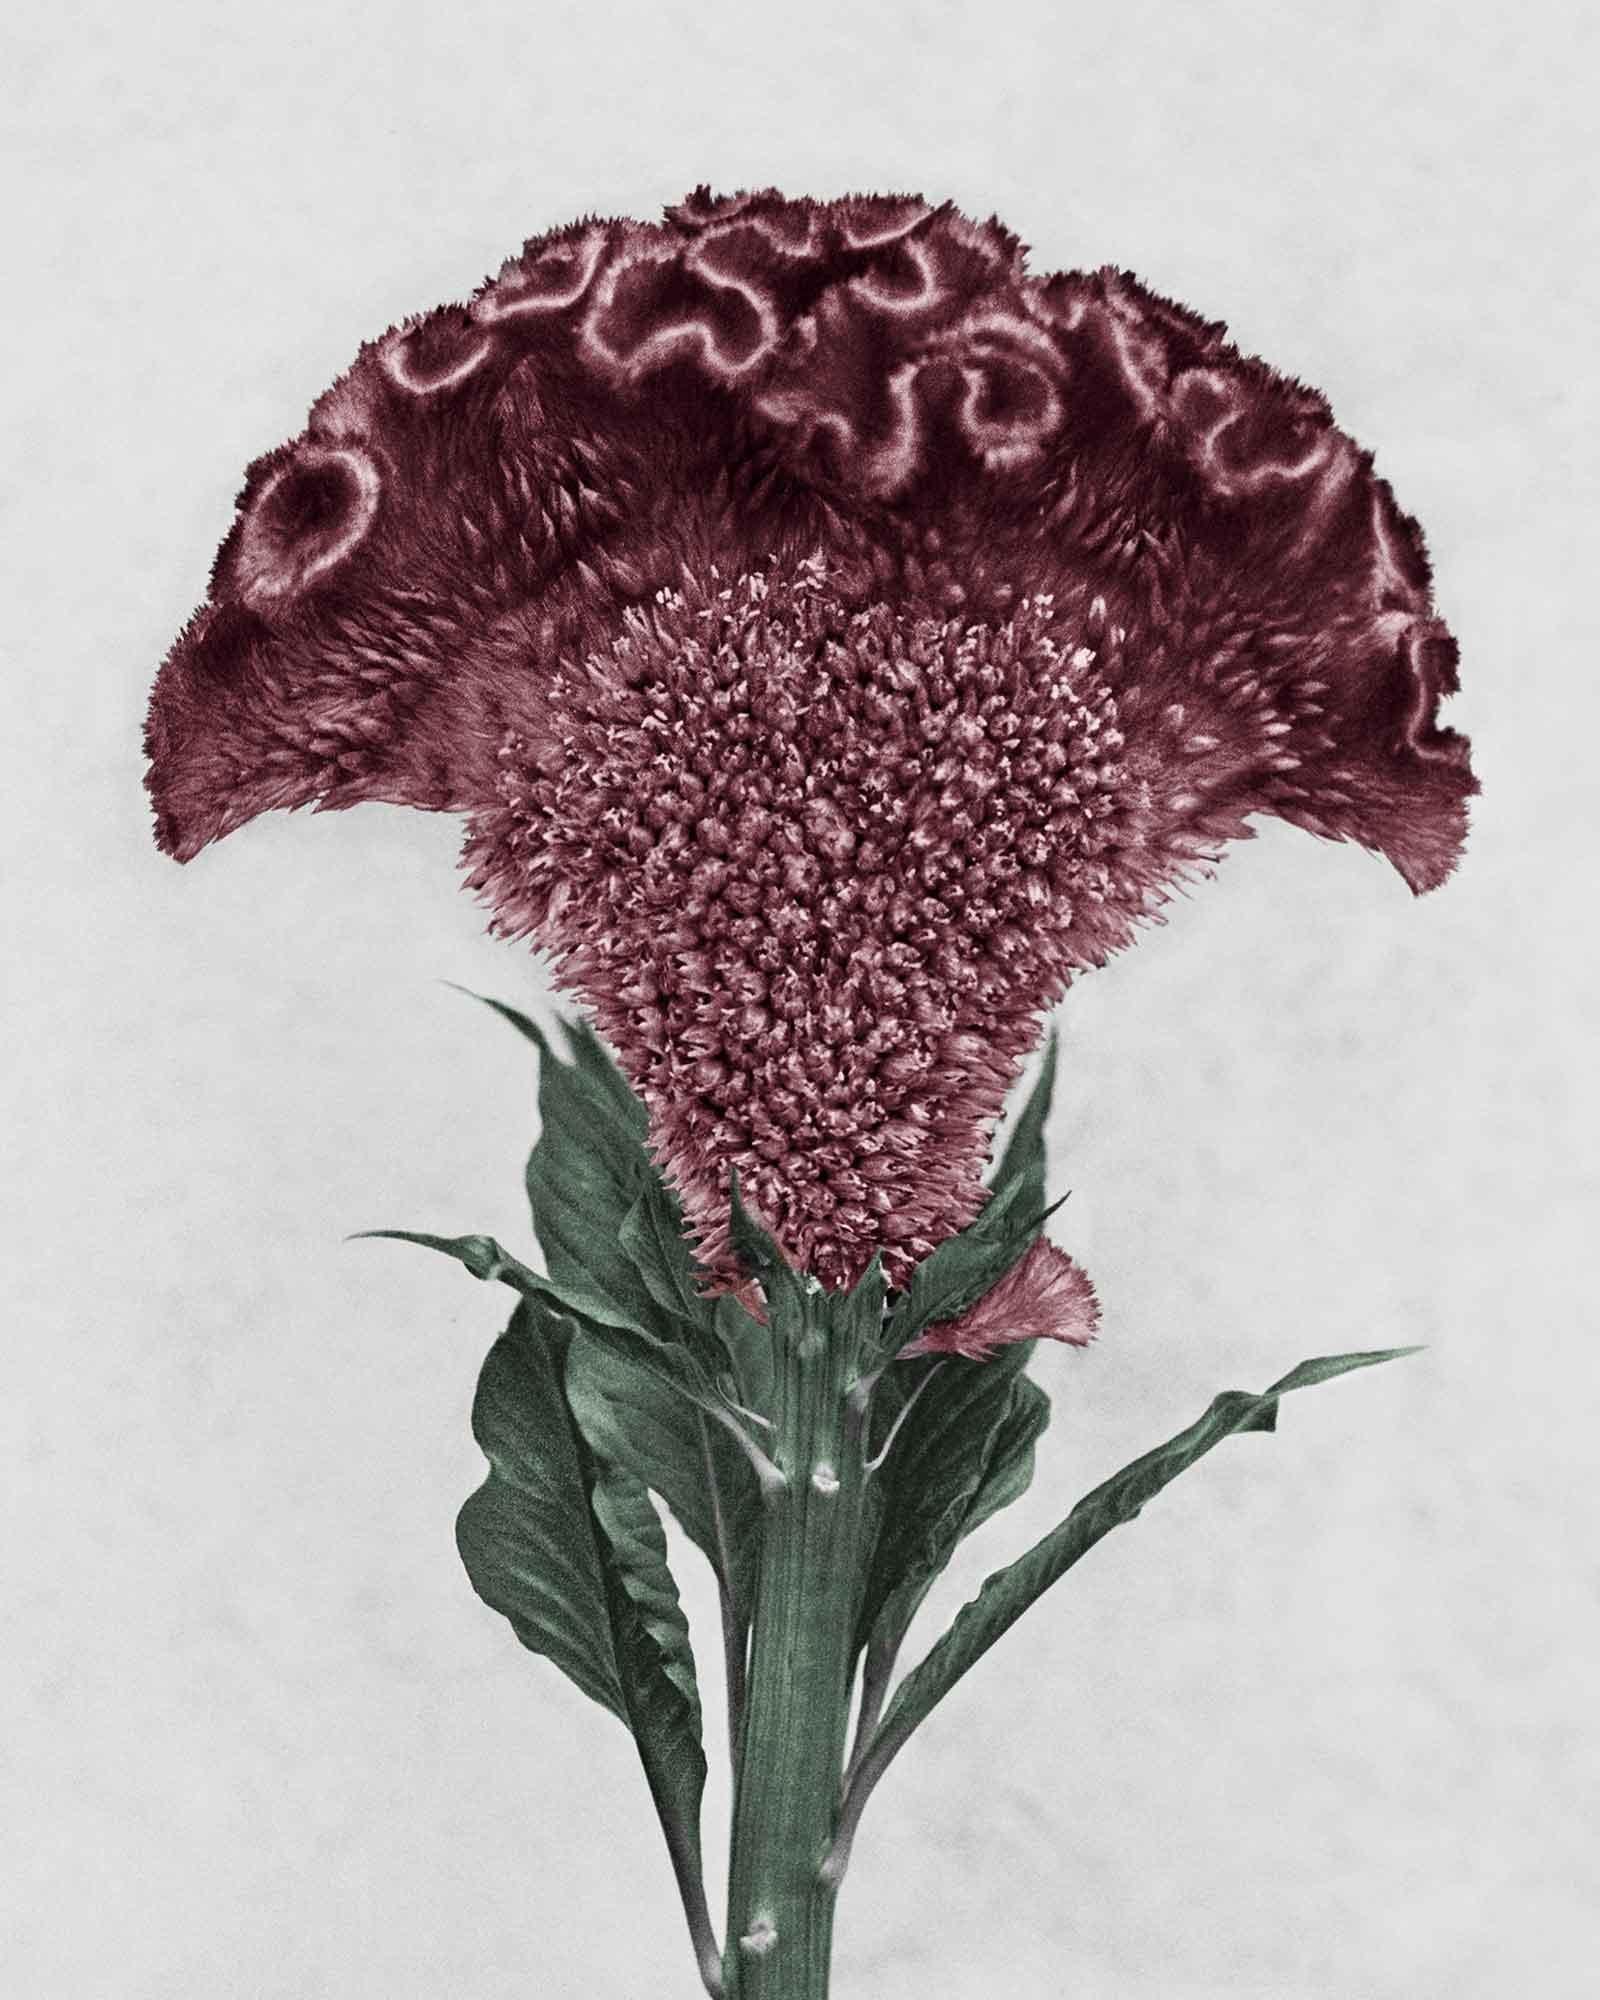 Botanica #3 (Celosia Cristata) - Photograph by Vee Speers